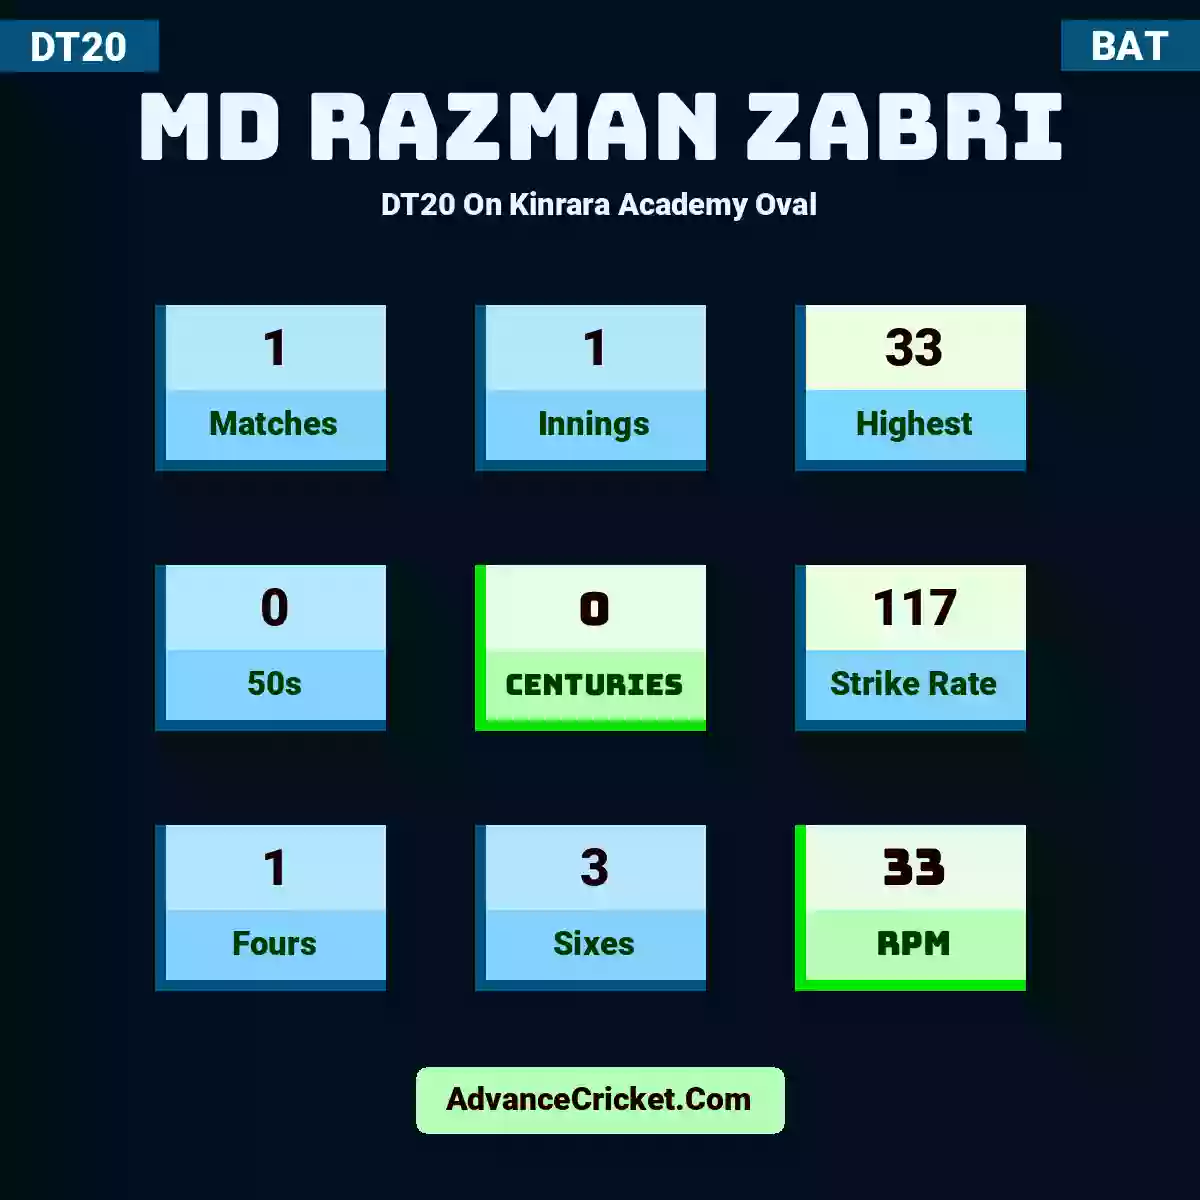 Md Razman Zabri DT20  On Kinrara Academy Oval, Md Razman Zabri played 1 matches, scored 33 runs as highest, 0 half-centuries, and 0 centuries, with a strike rate of 117. M.Razman.Zabri hit 1 fours and 3 sixes, with an RPM of 33.